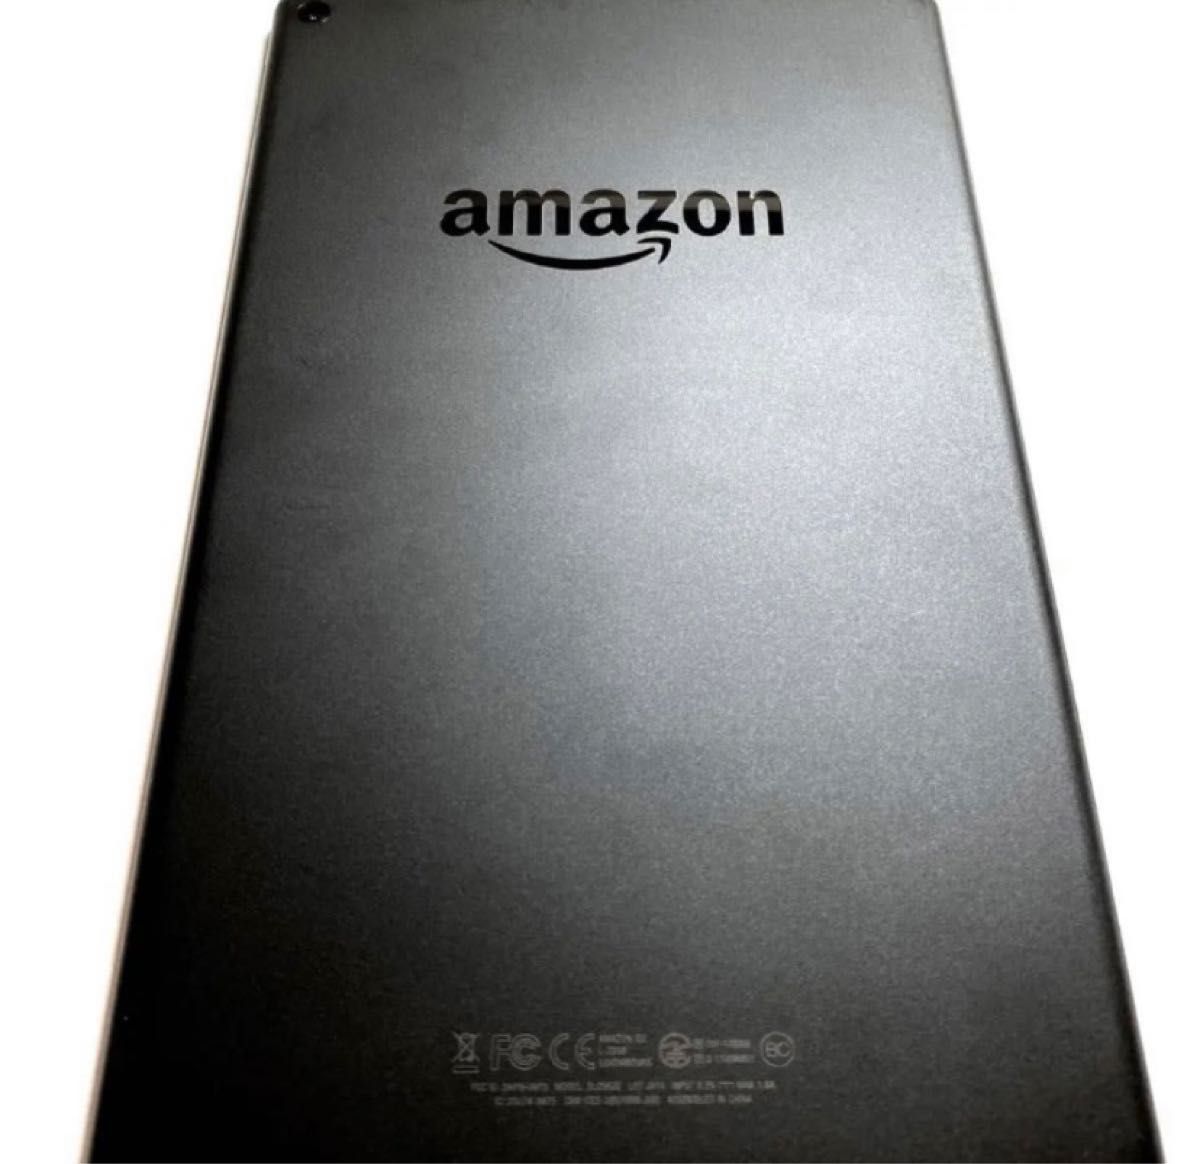 Amazon Kindle Fire HD 10 (第7世代) 32GB